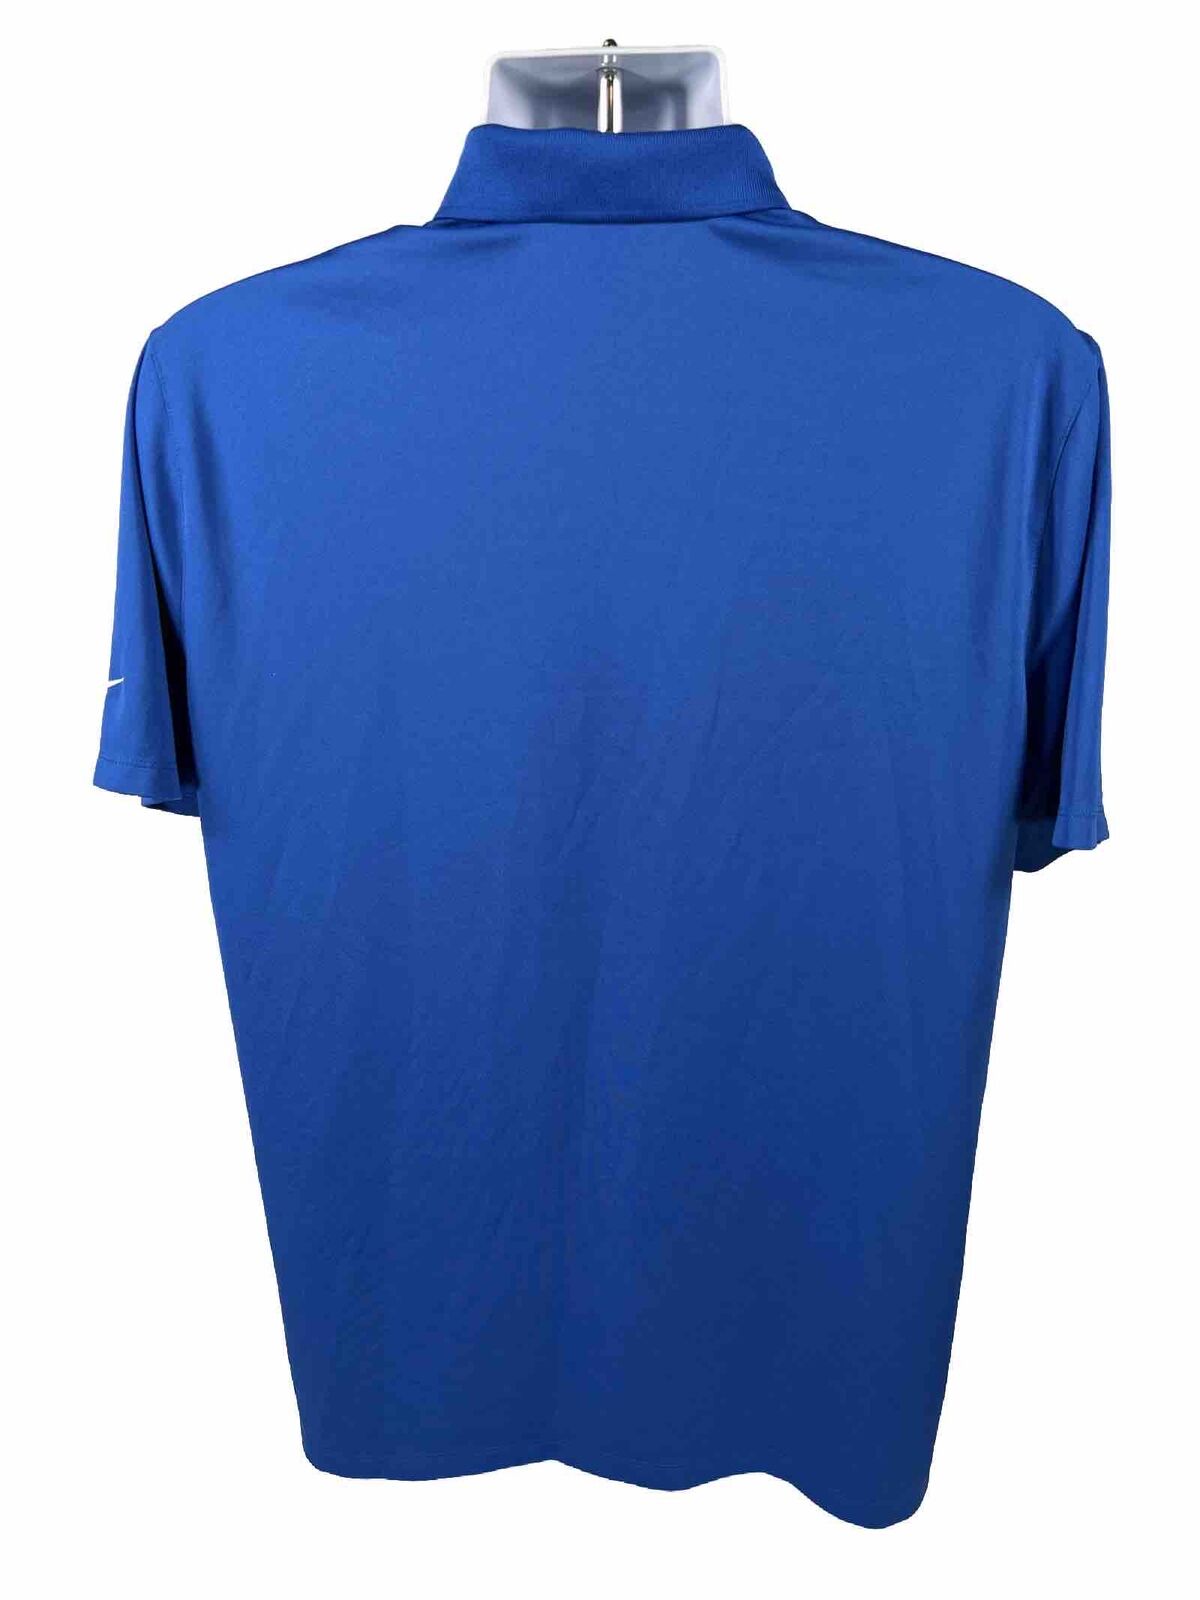 Nike Men's Blue Short Sleeve Polyester Golf Polo Shirt - L